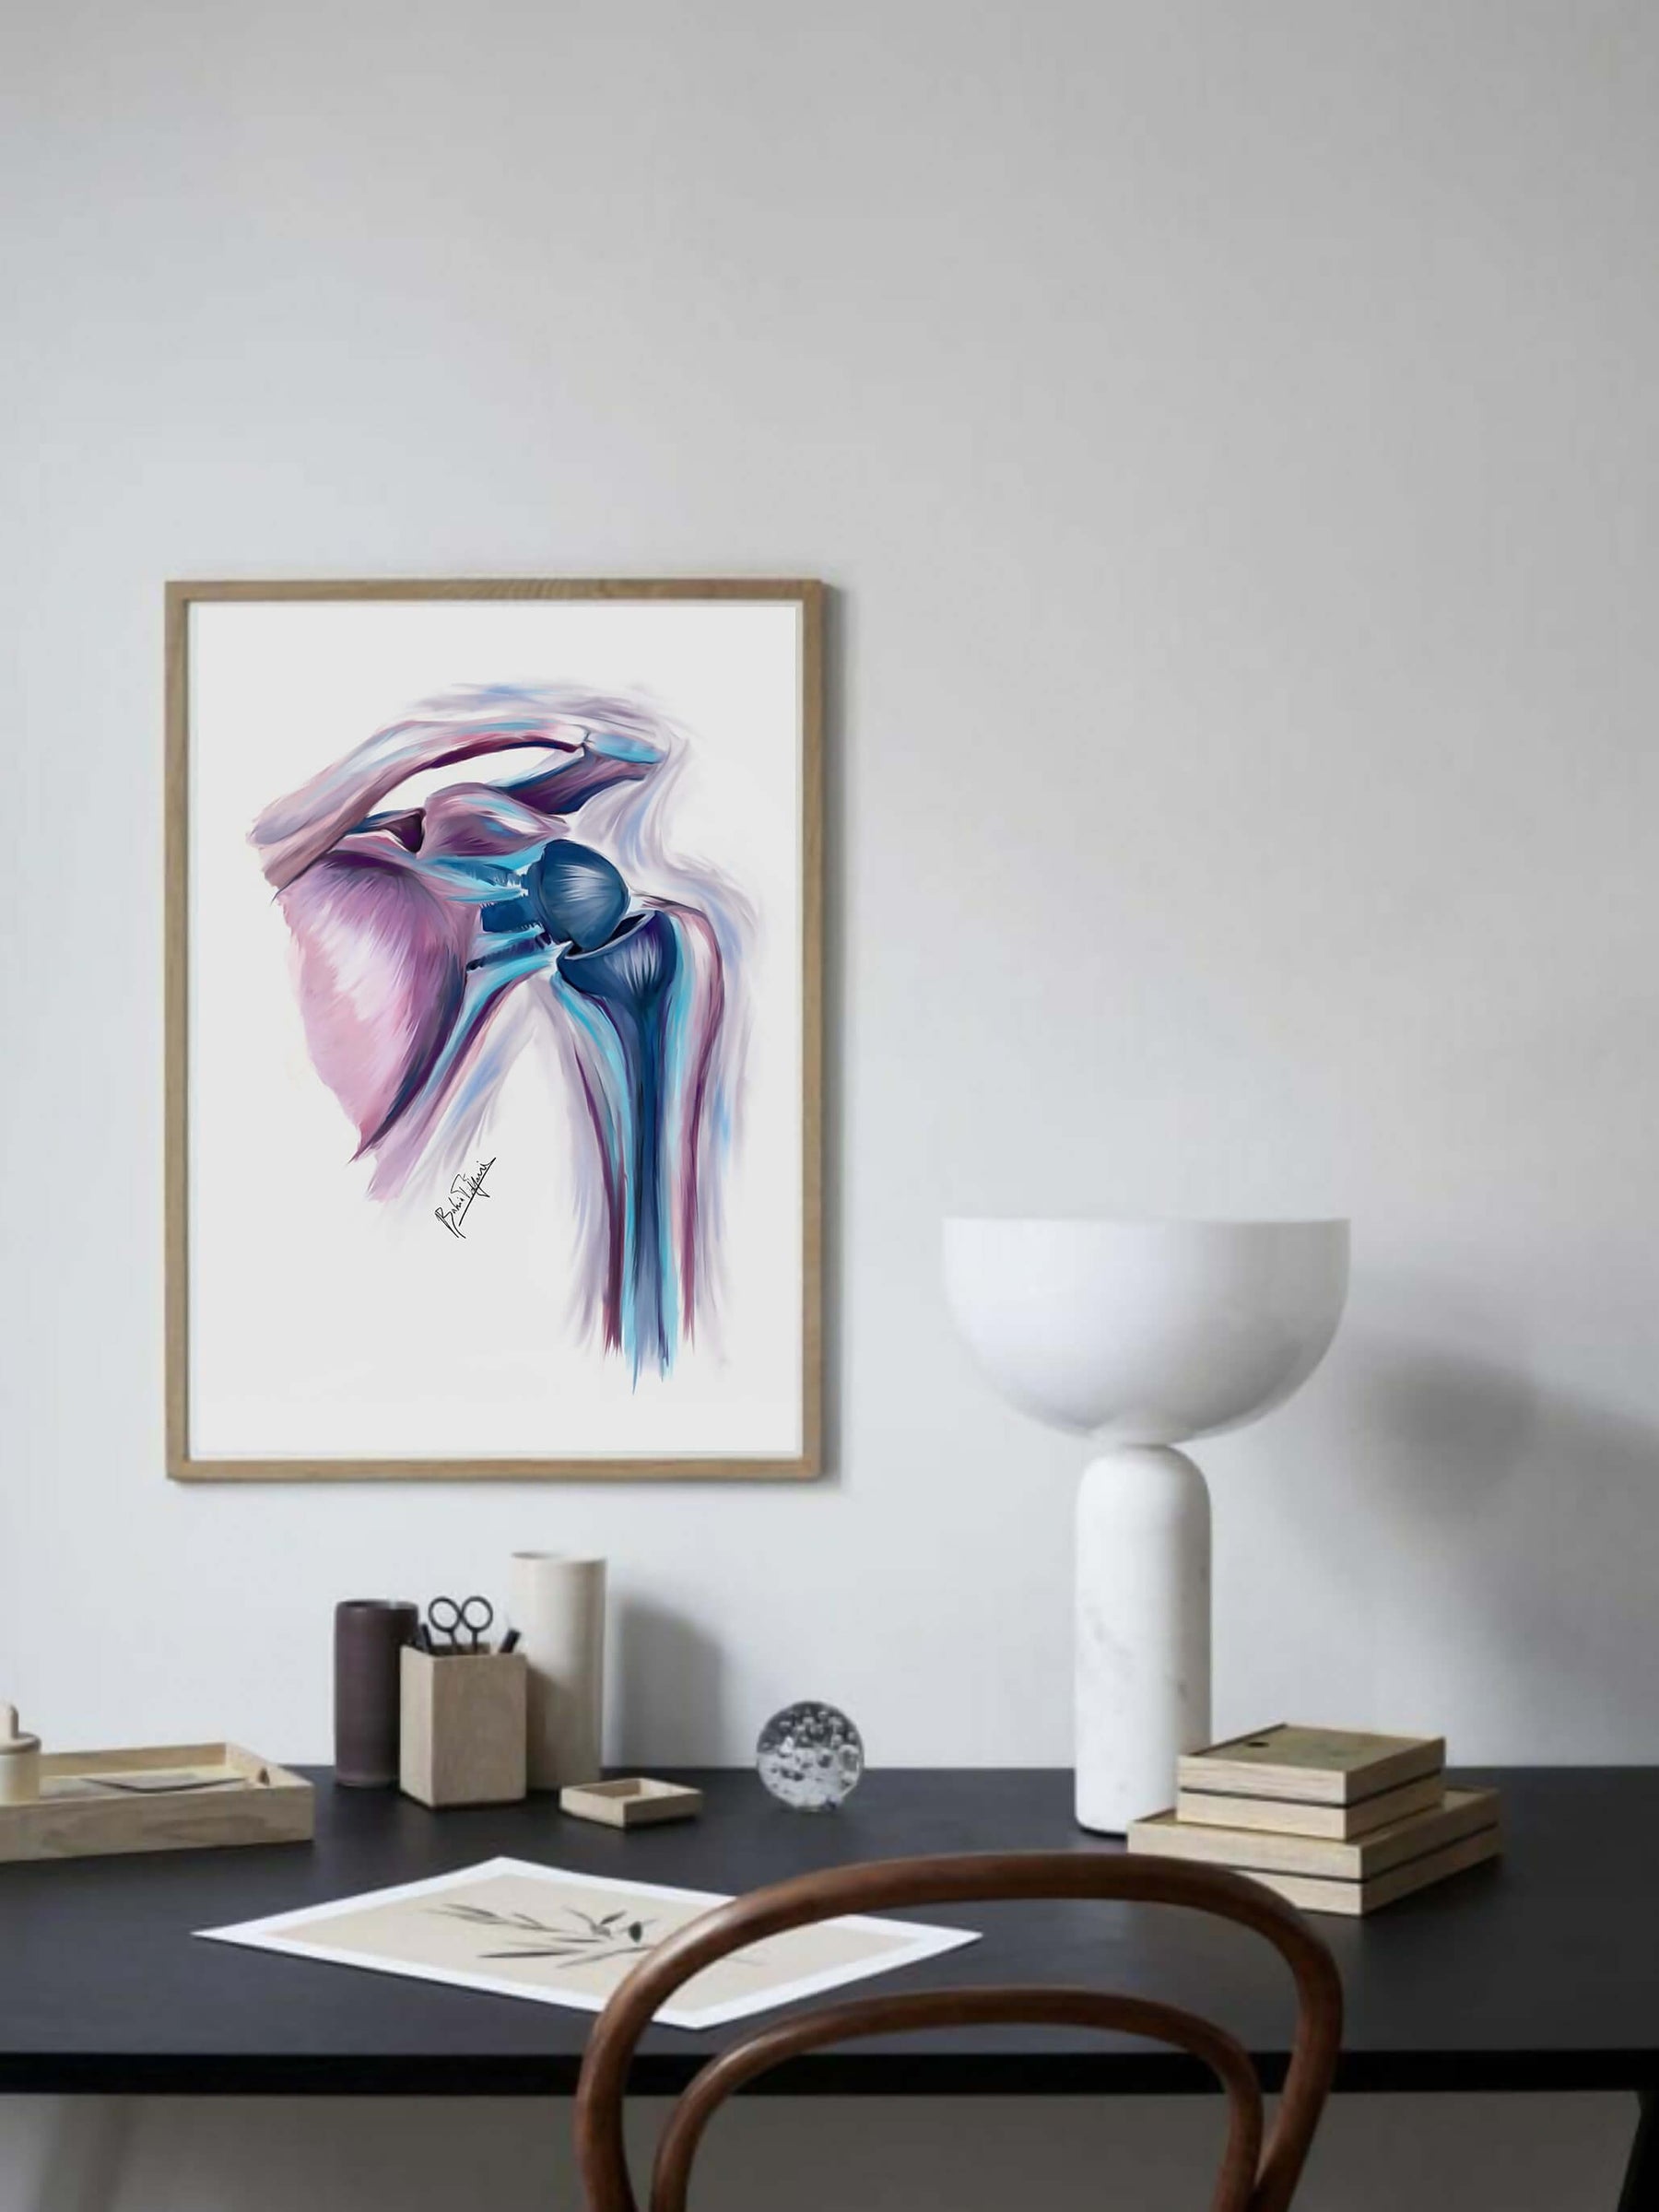 Shoulder replacement art print-Orthopedic surgery art-anatomical art - musculoskeletal anatomy-joint replacement-Orthopedic surgeon gift